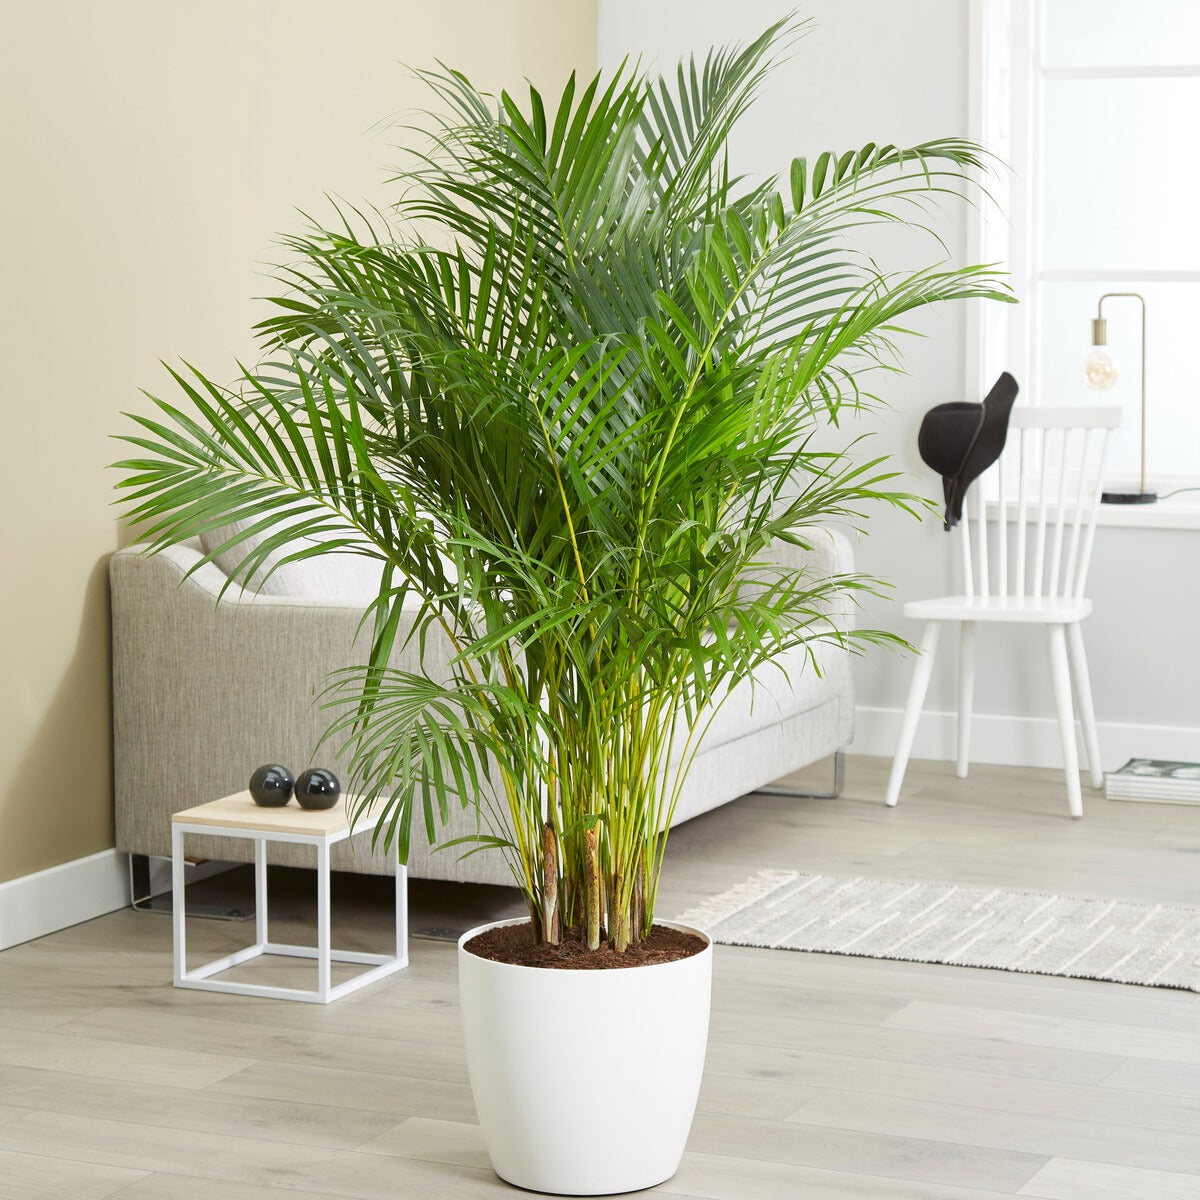 Areca palm - Dypsis lutescens - Kamerplanten